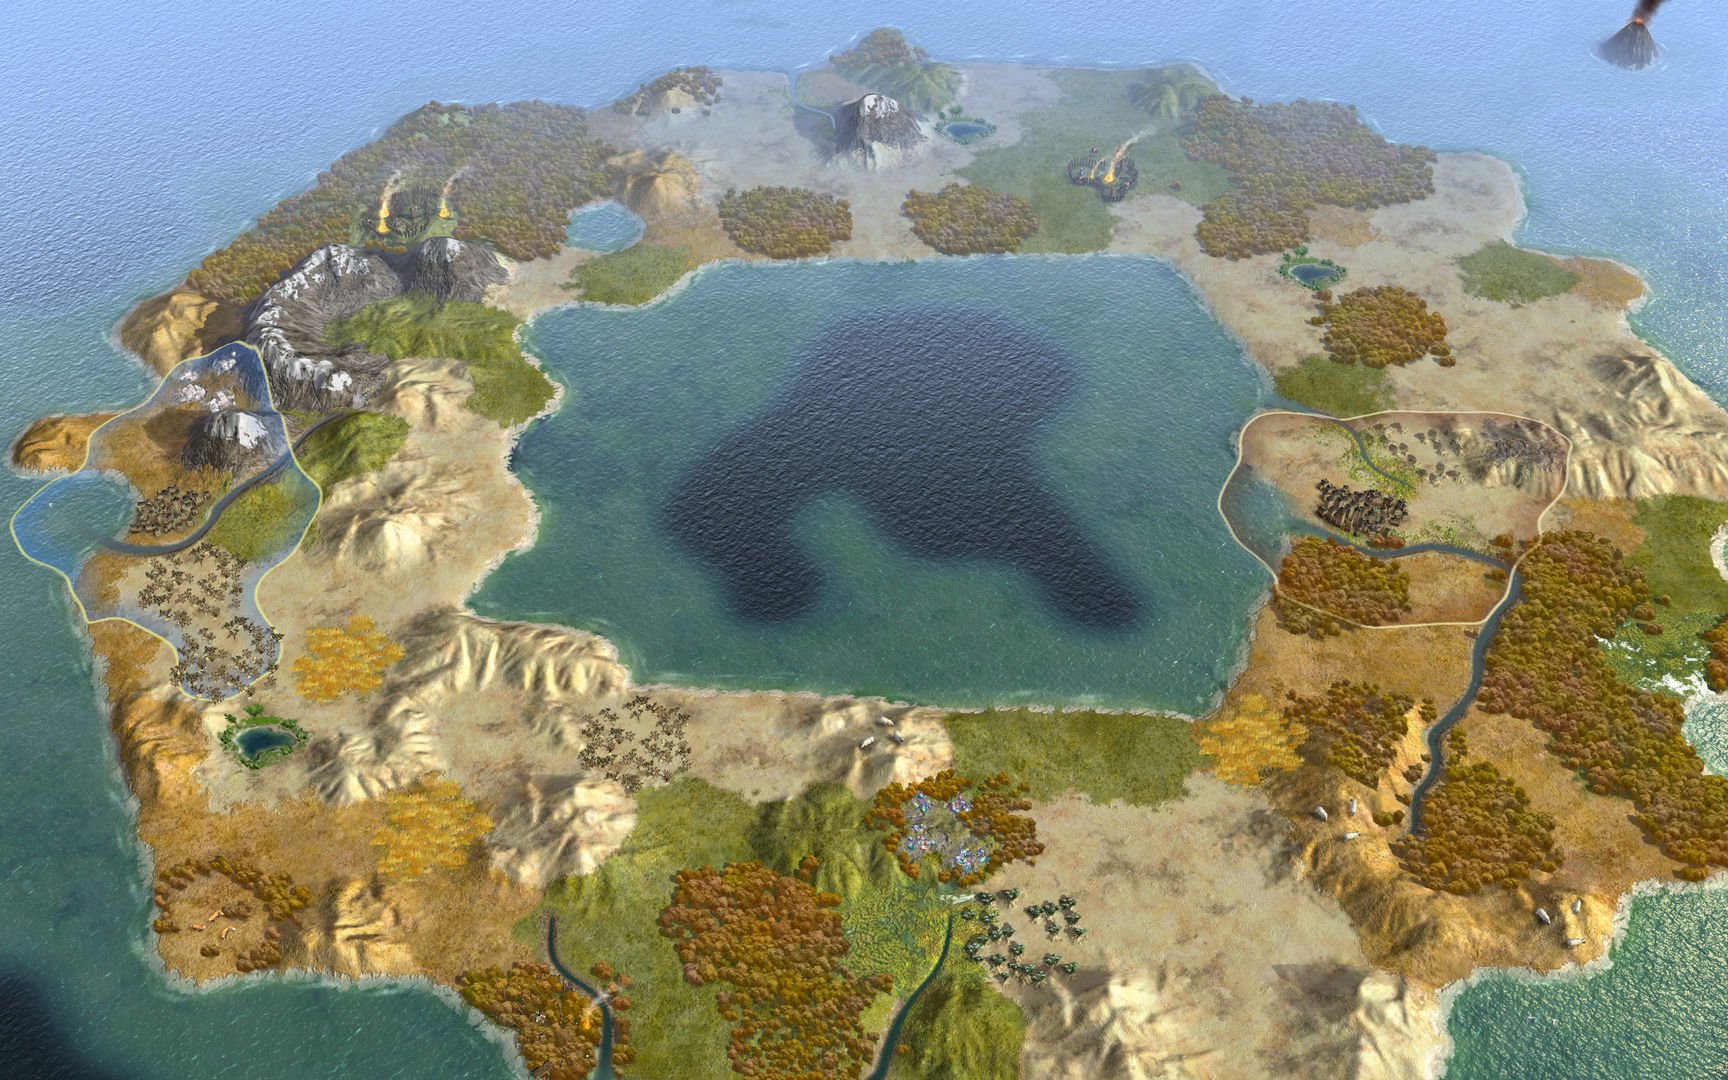 Sid Meiers Civilization V Explorers Map Pack 2